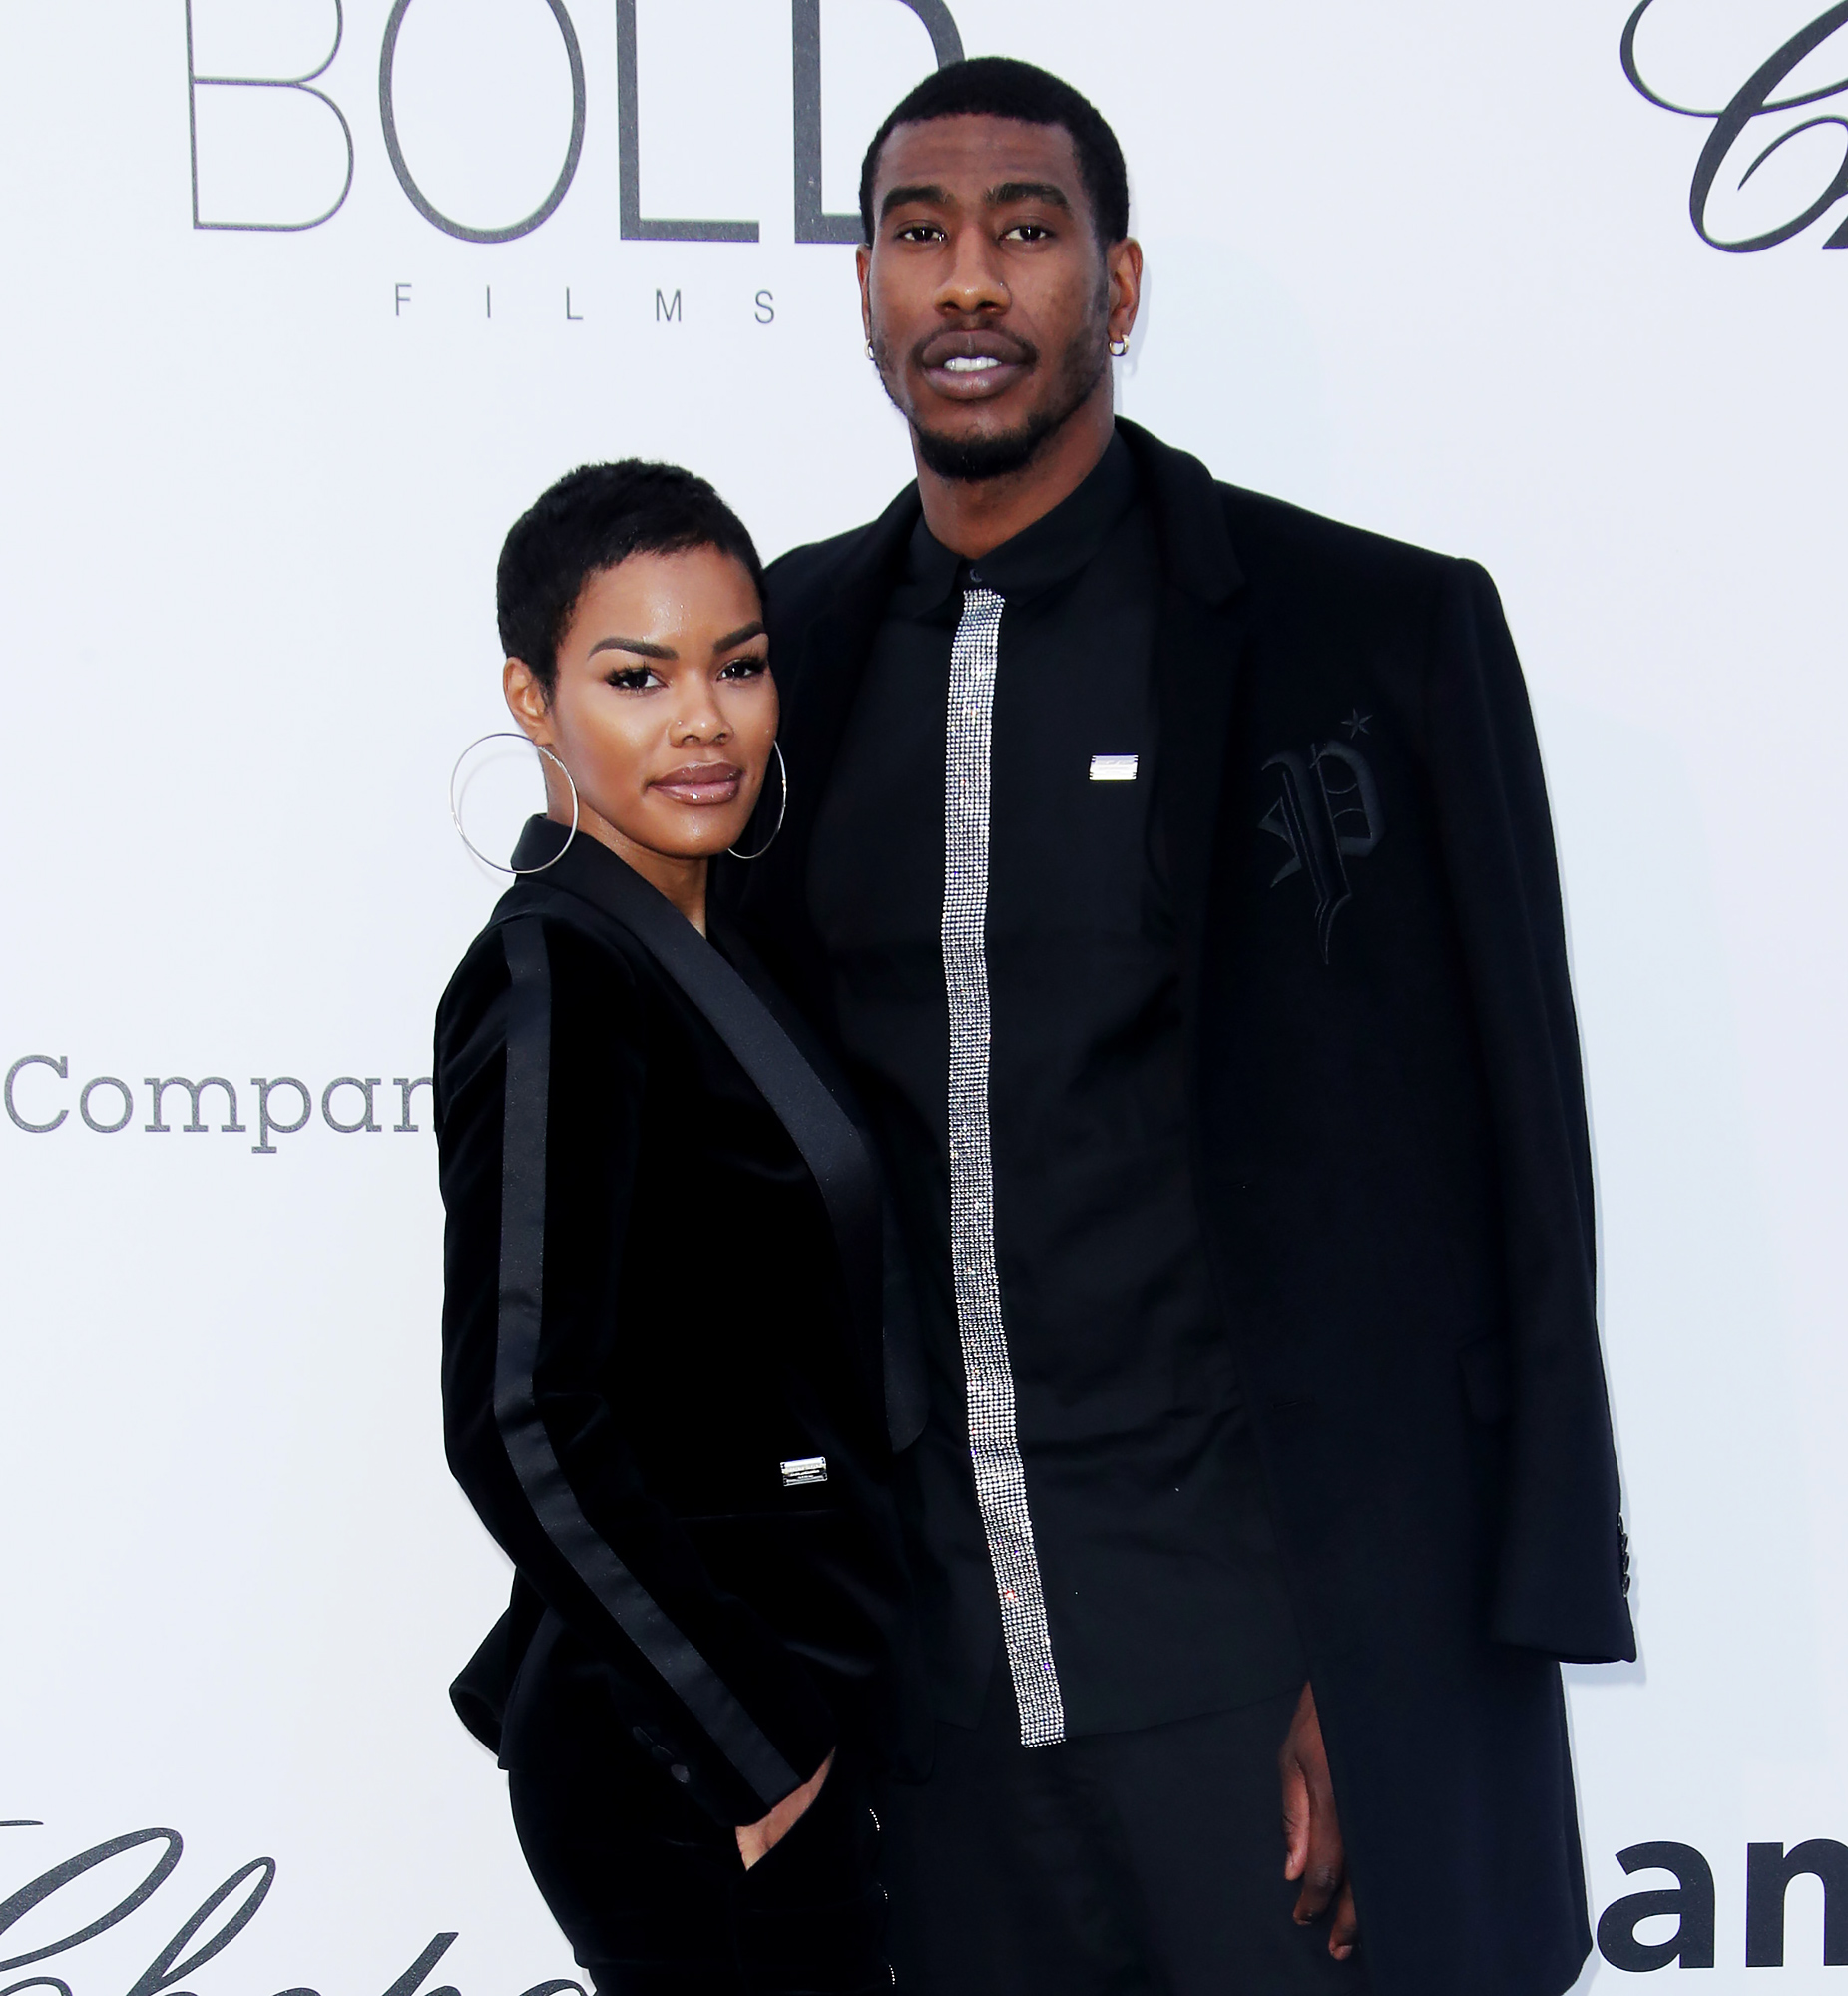 EXCLUSIVE: Teyana Taylor's Husband NBA Star Iman Shumpert